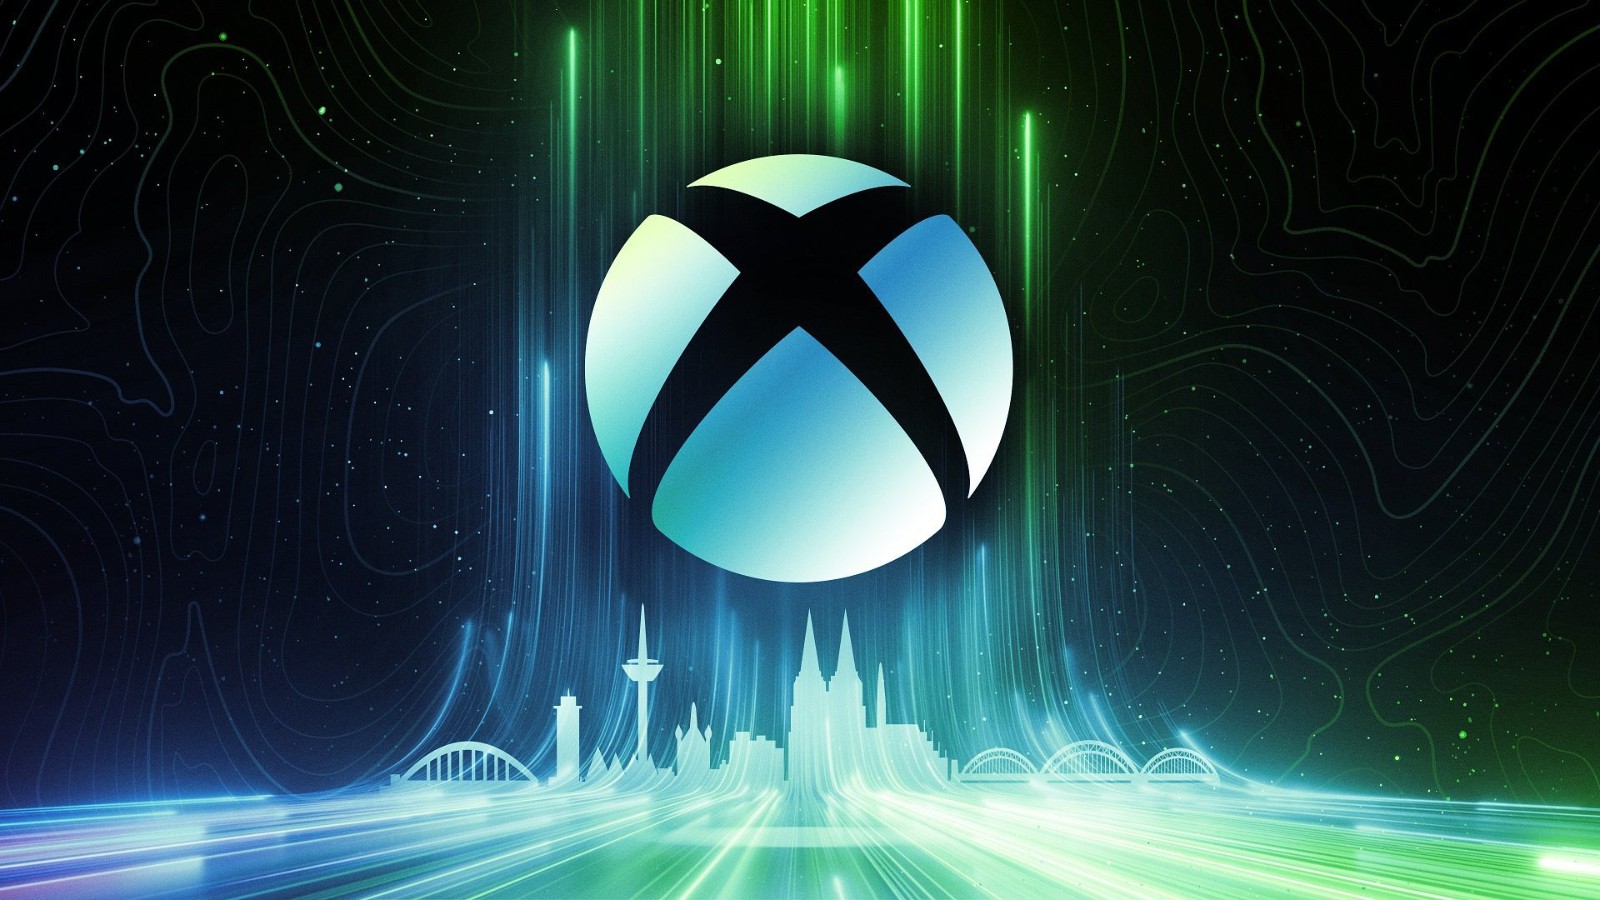 Xbox老大斯賓塞：獨占遊戲在未來十年內將不那麼重要